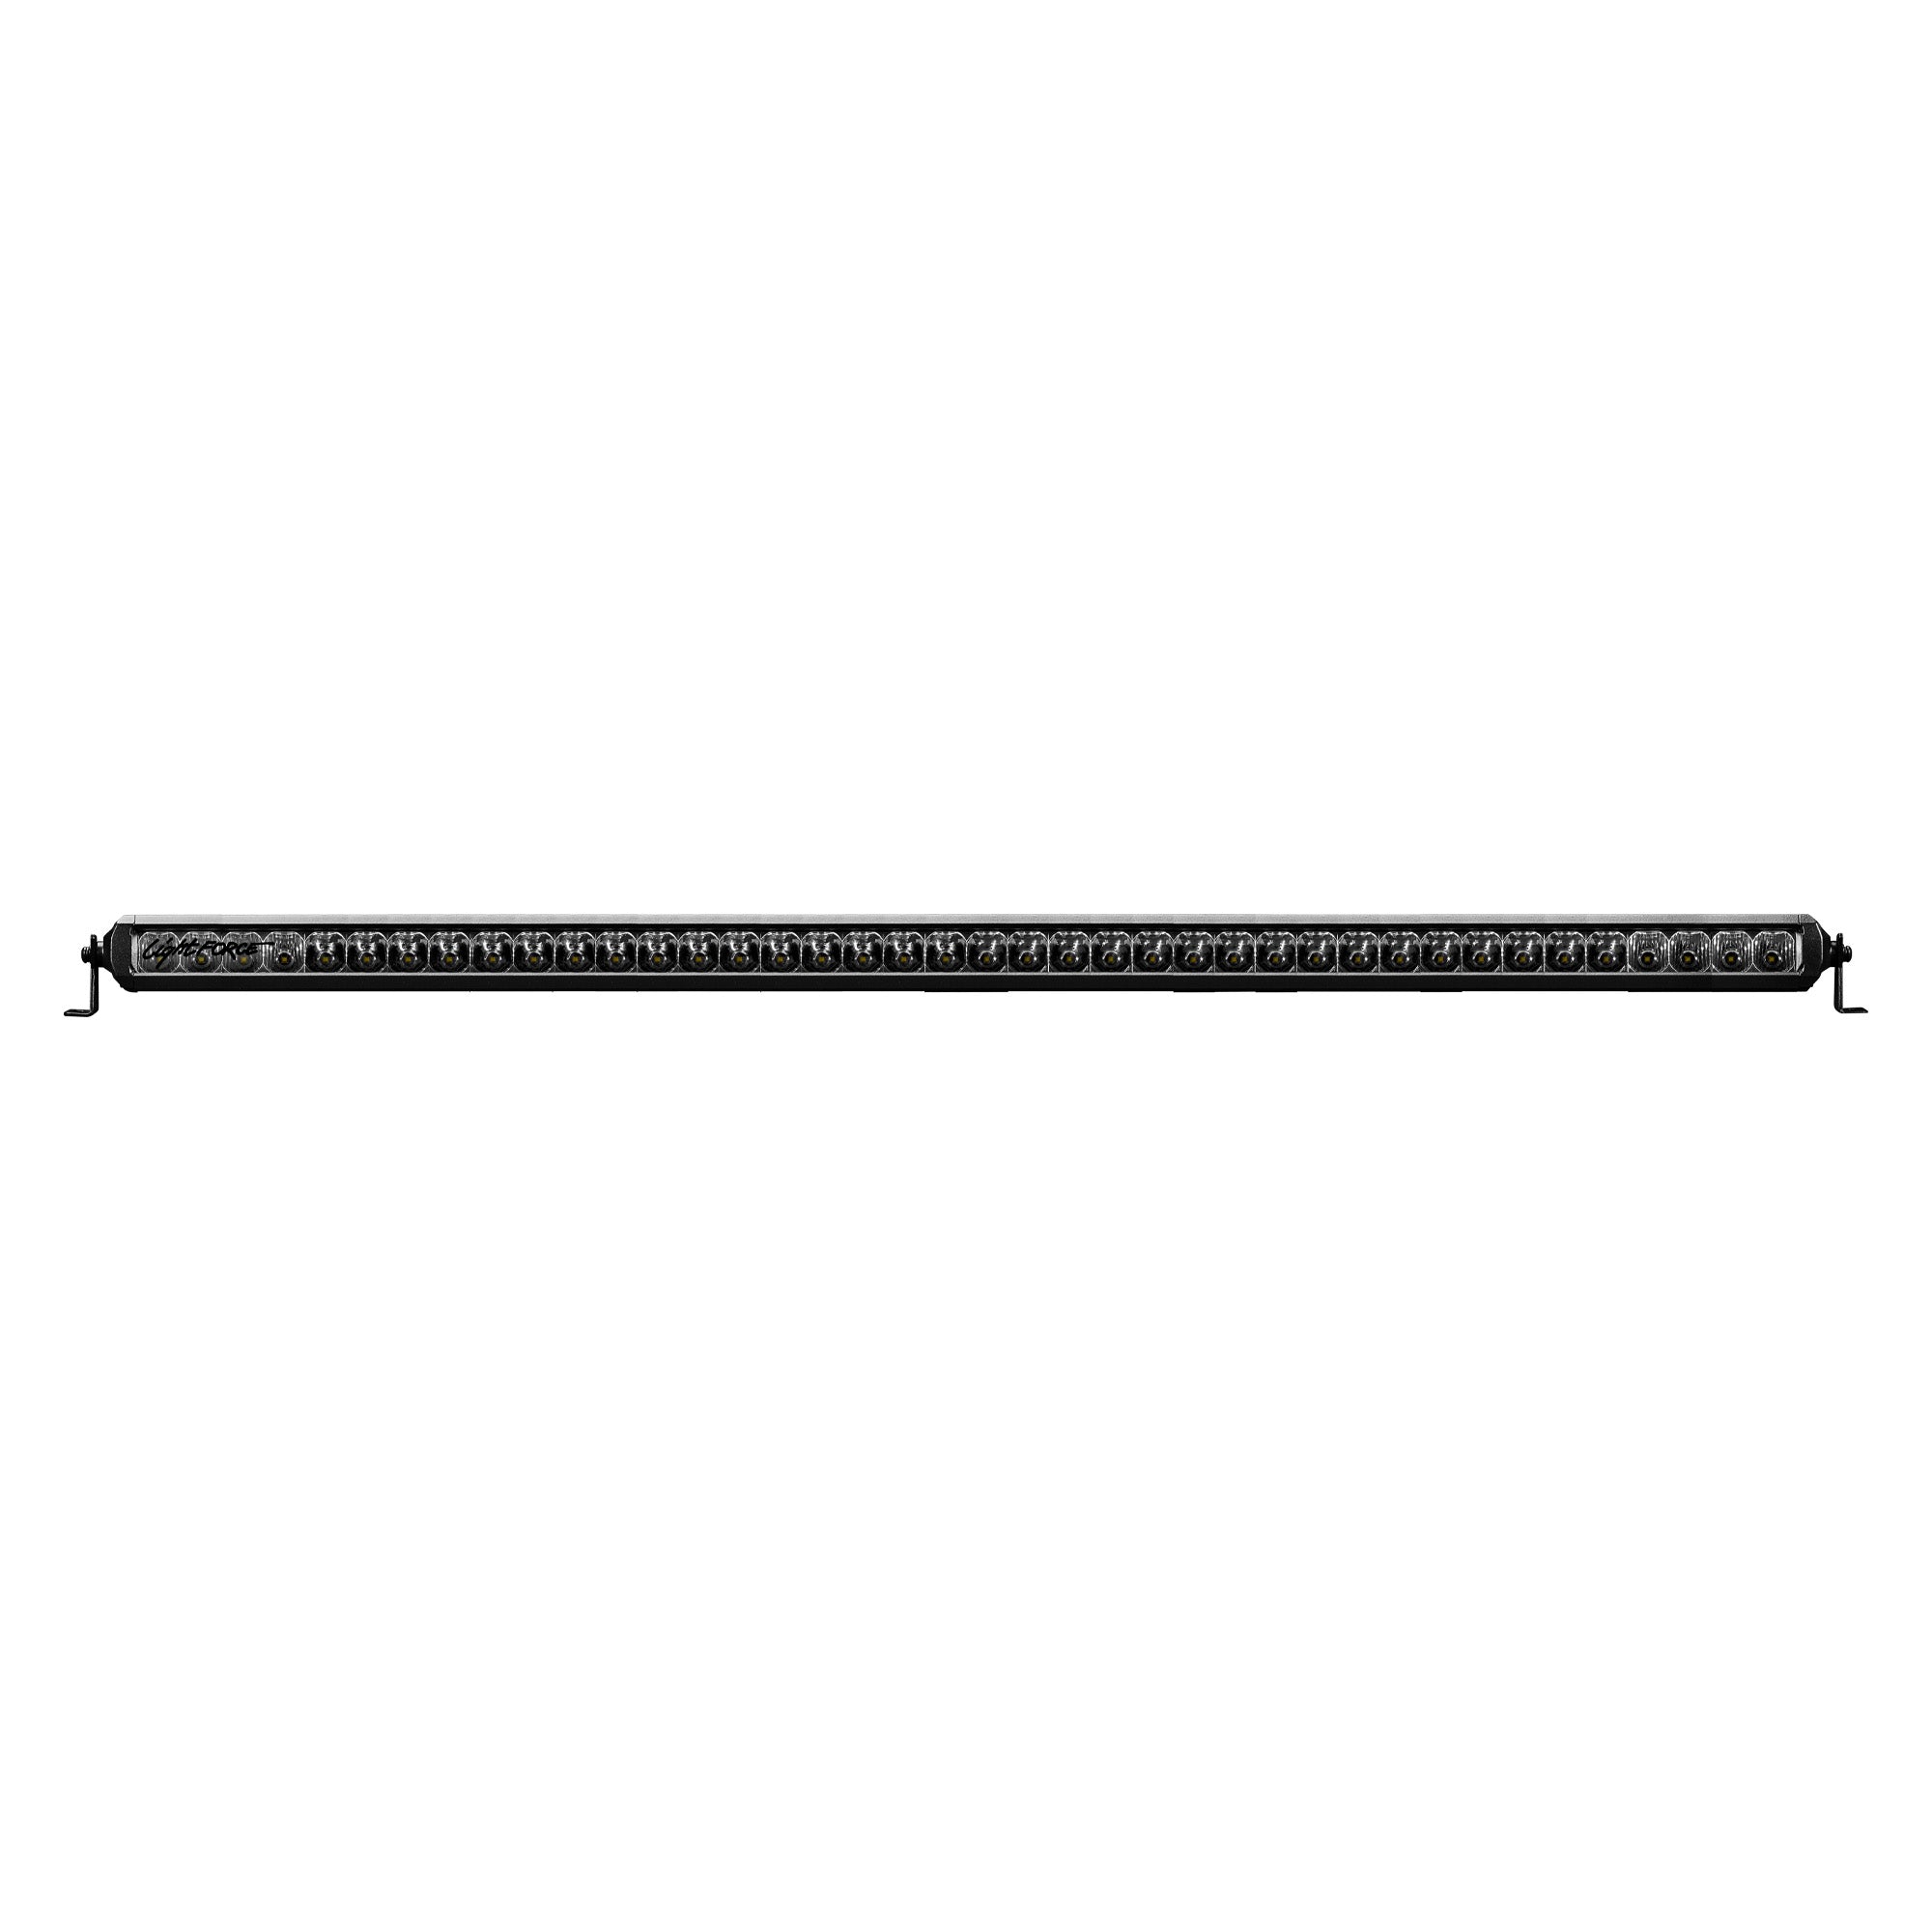 Viper 40 Inch Single Row LED Light Bar